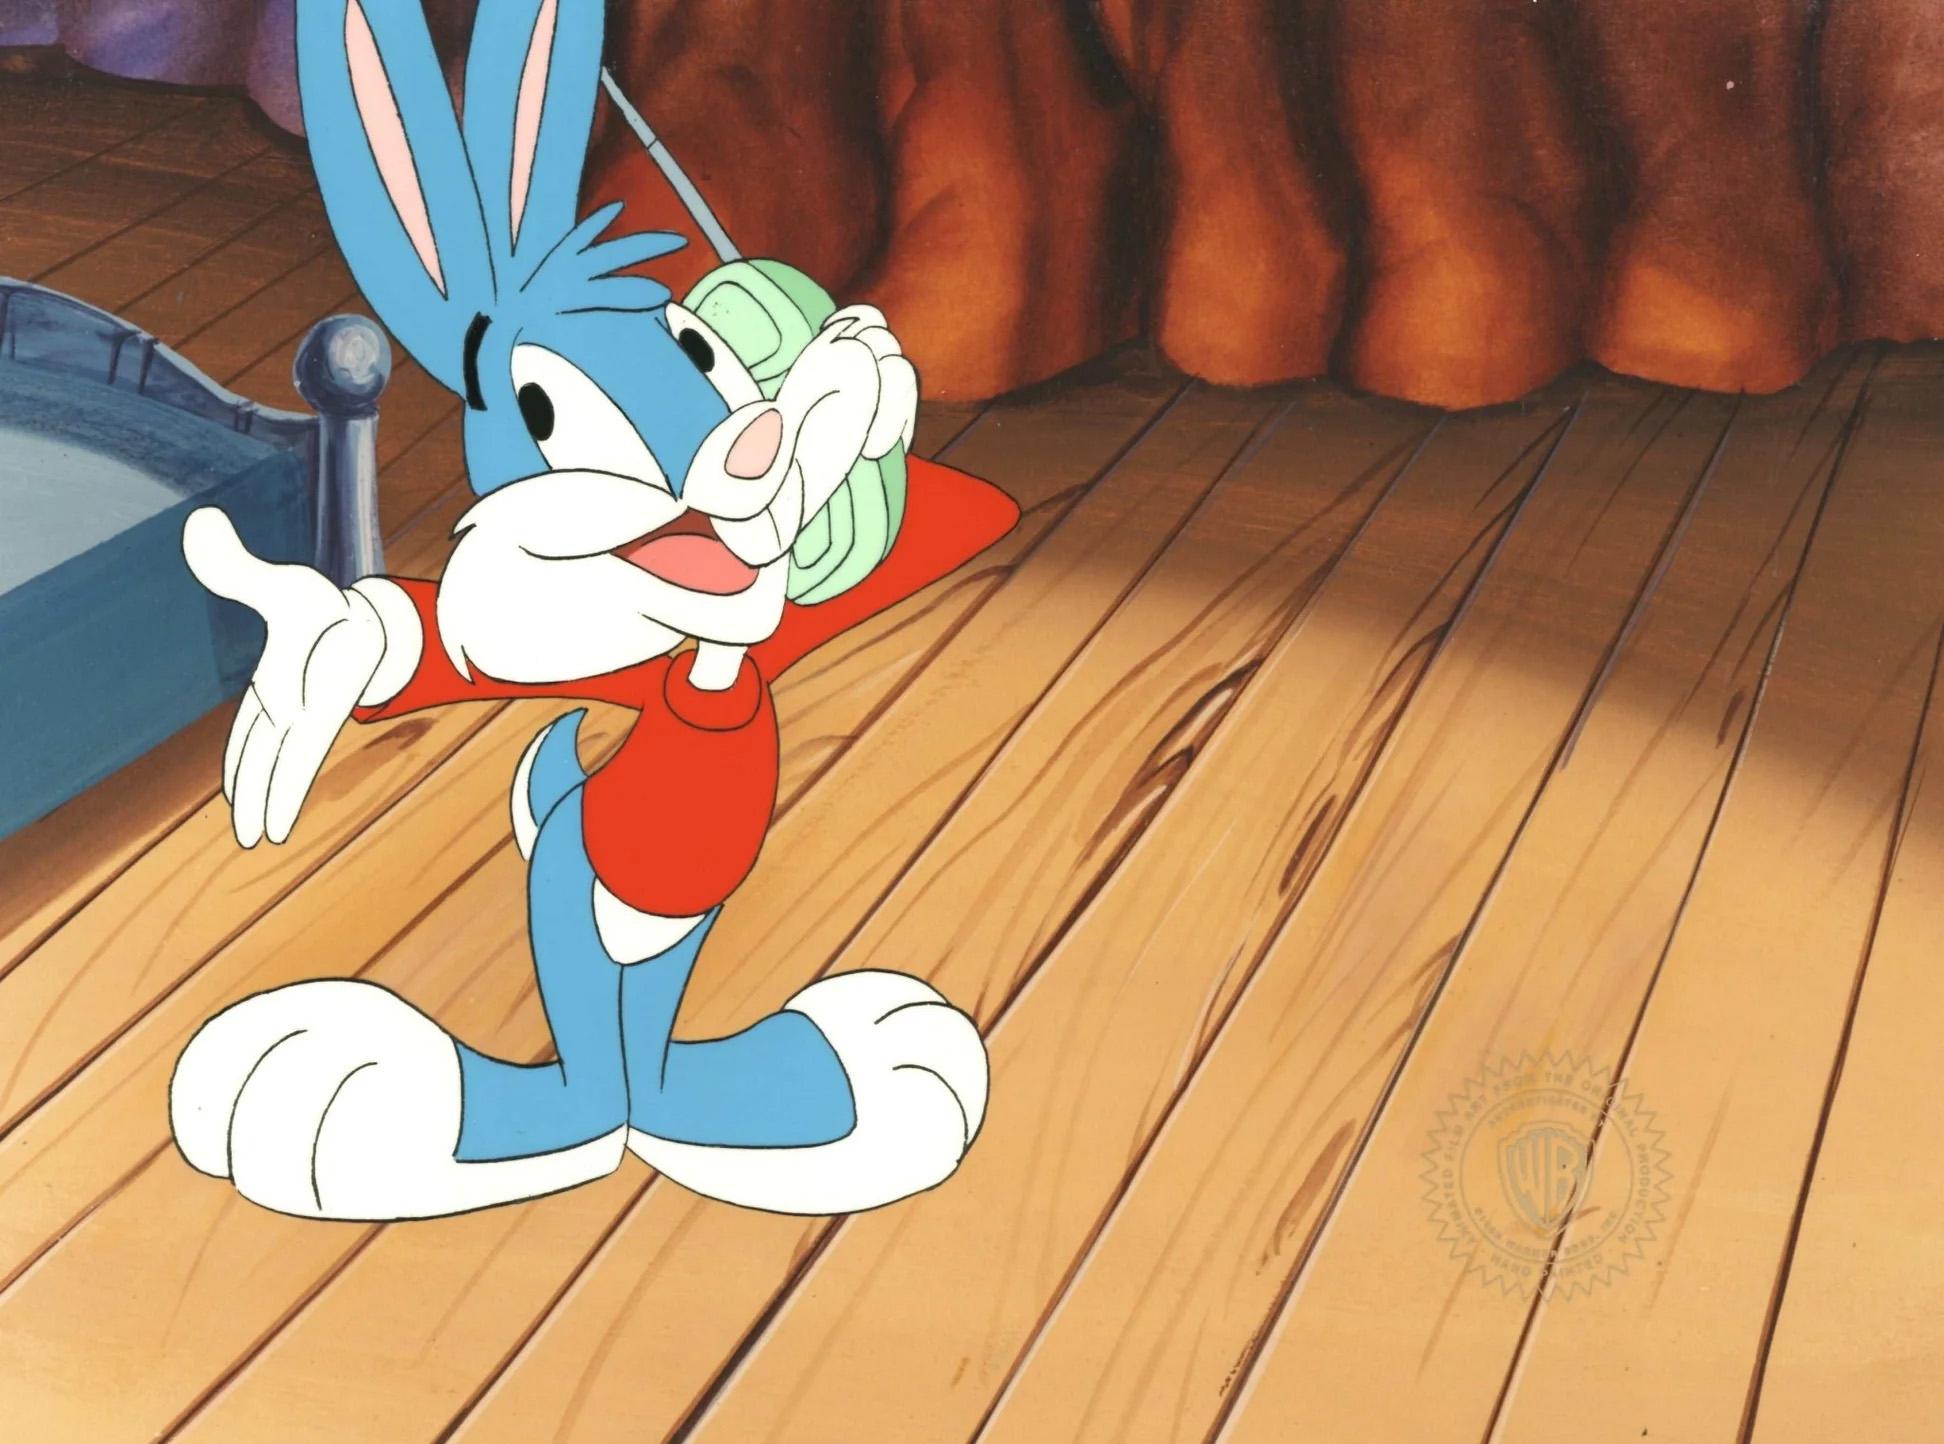 Tiny Toons Original Production Cel: Buster Bunny - Art by Warner Bros. Studio Artists